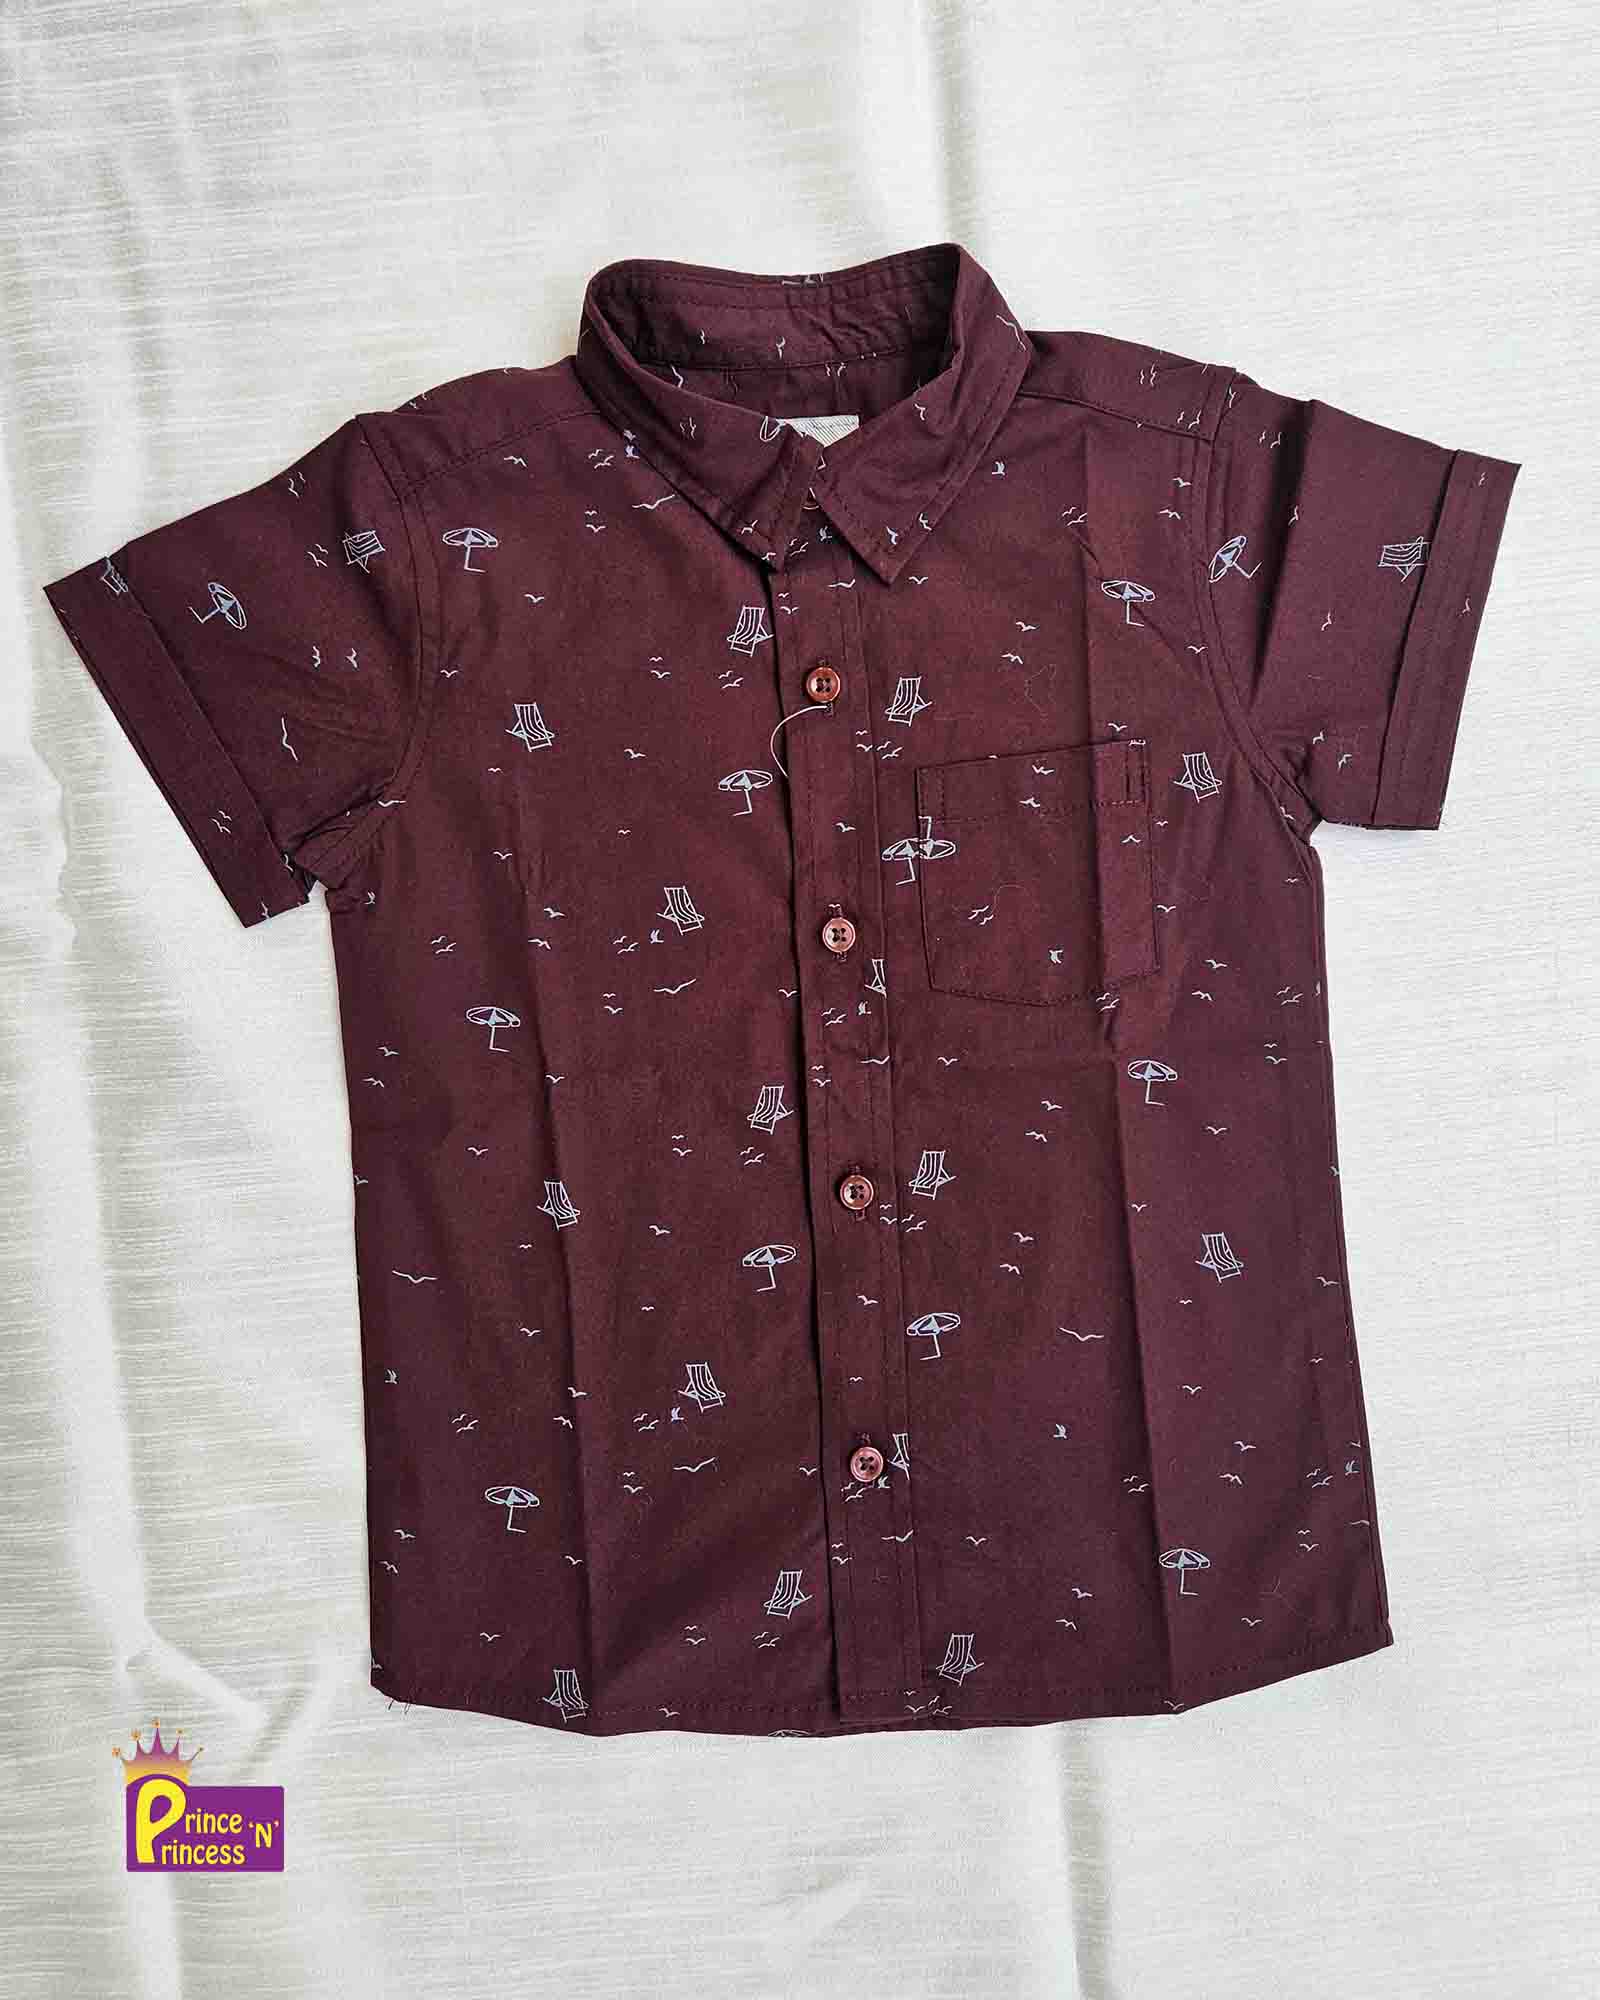 Kids Cotton Printed Maroon half Sleeve shirt ST150 Prince N Princess